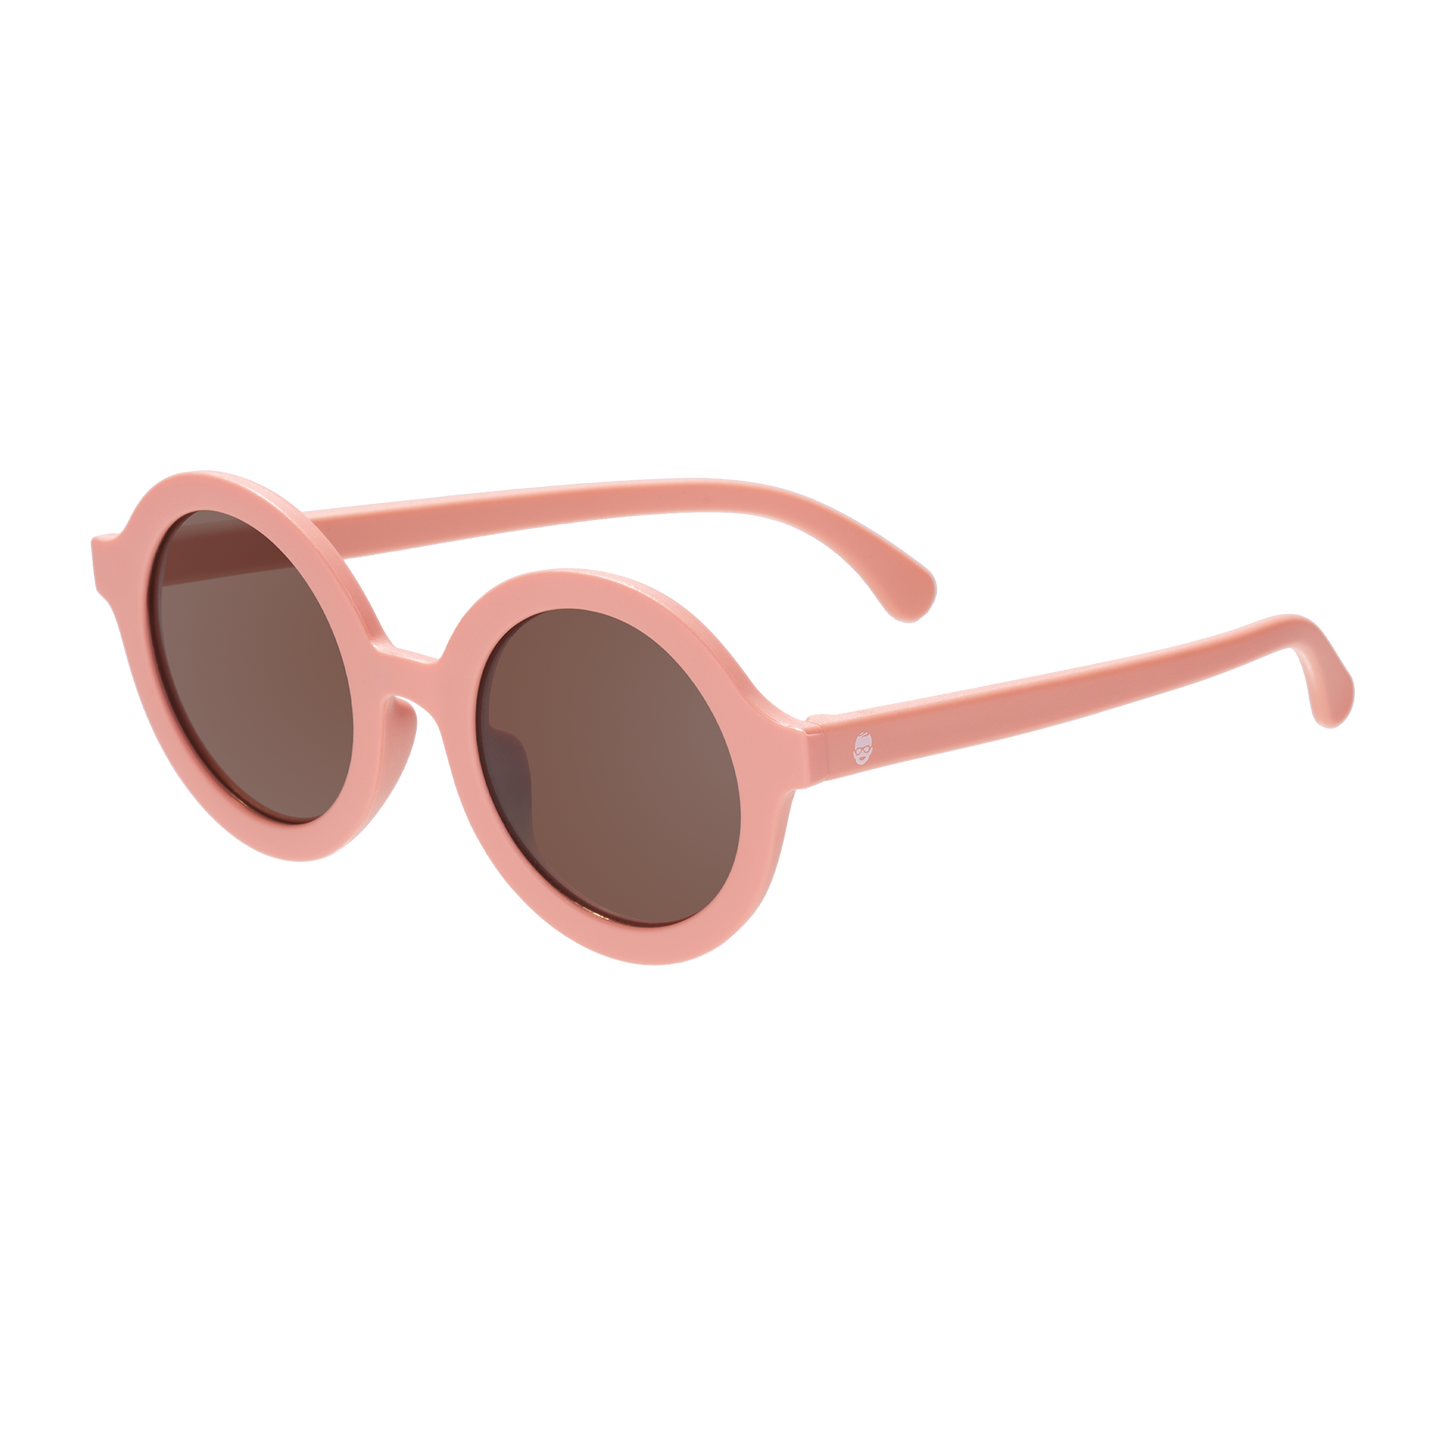 Ltd Euro Round Sunglasses "Peachy Keen''